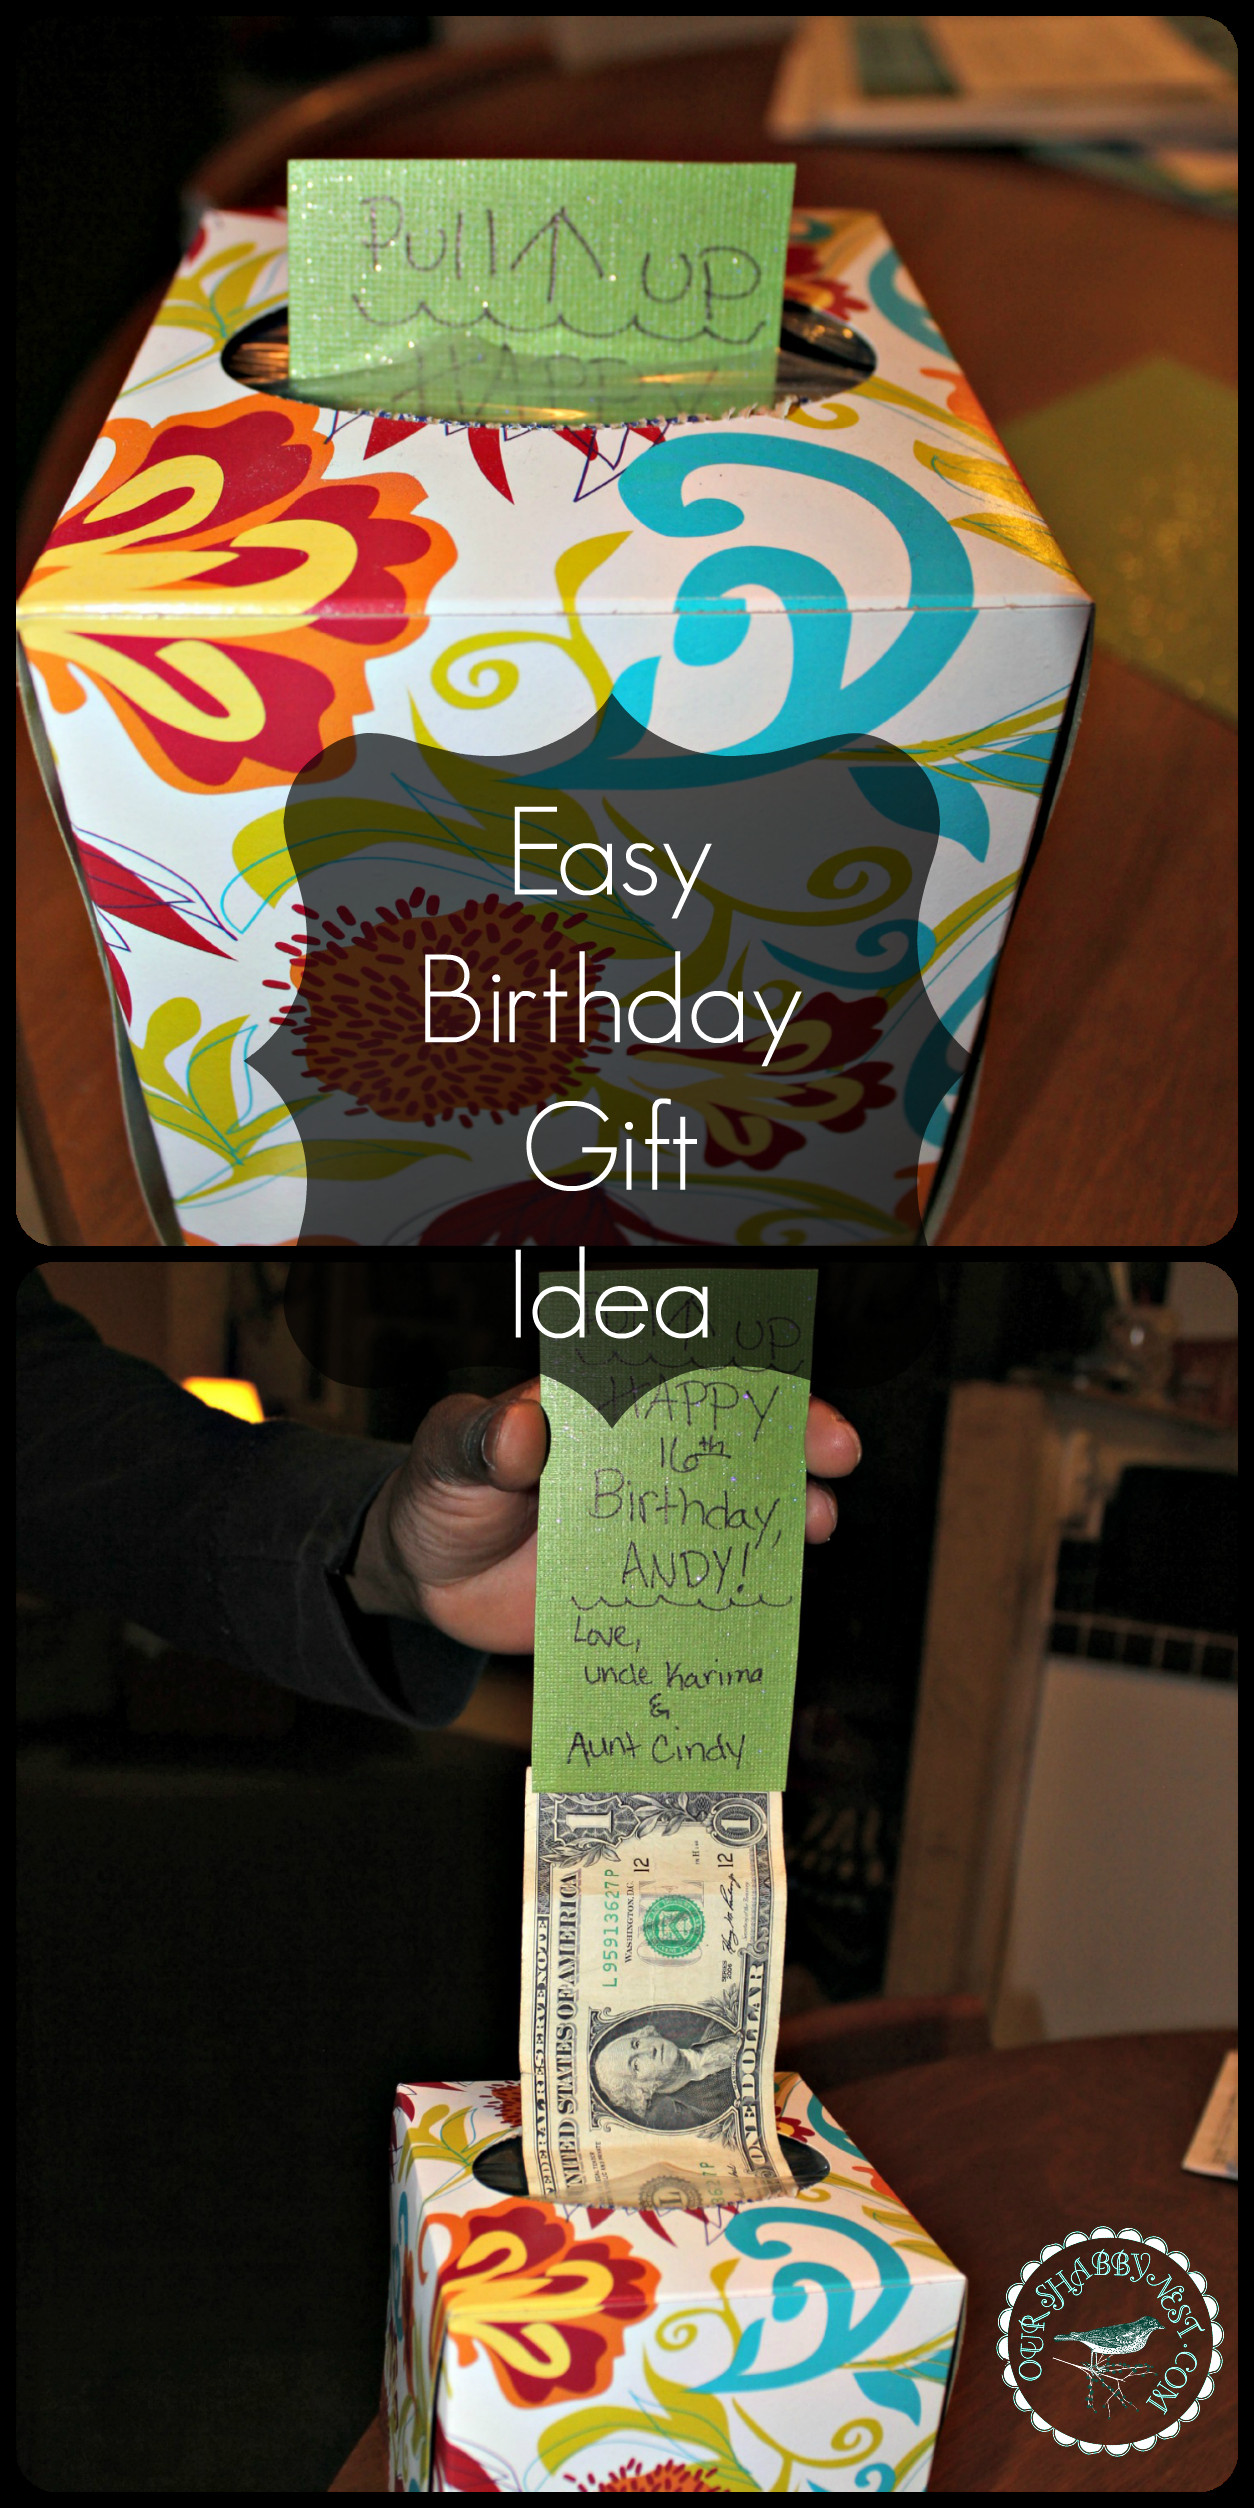 Money Gift Ideas For Birthdays
 The Best Money Gift Ideas for Birthdays Best Gift Ideas